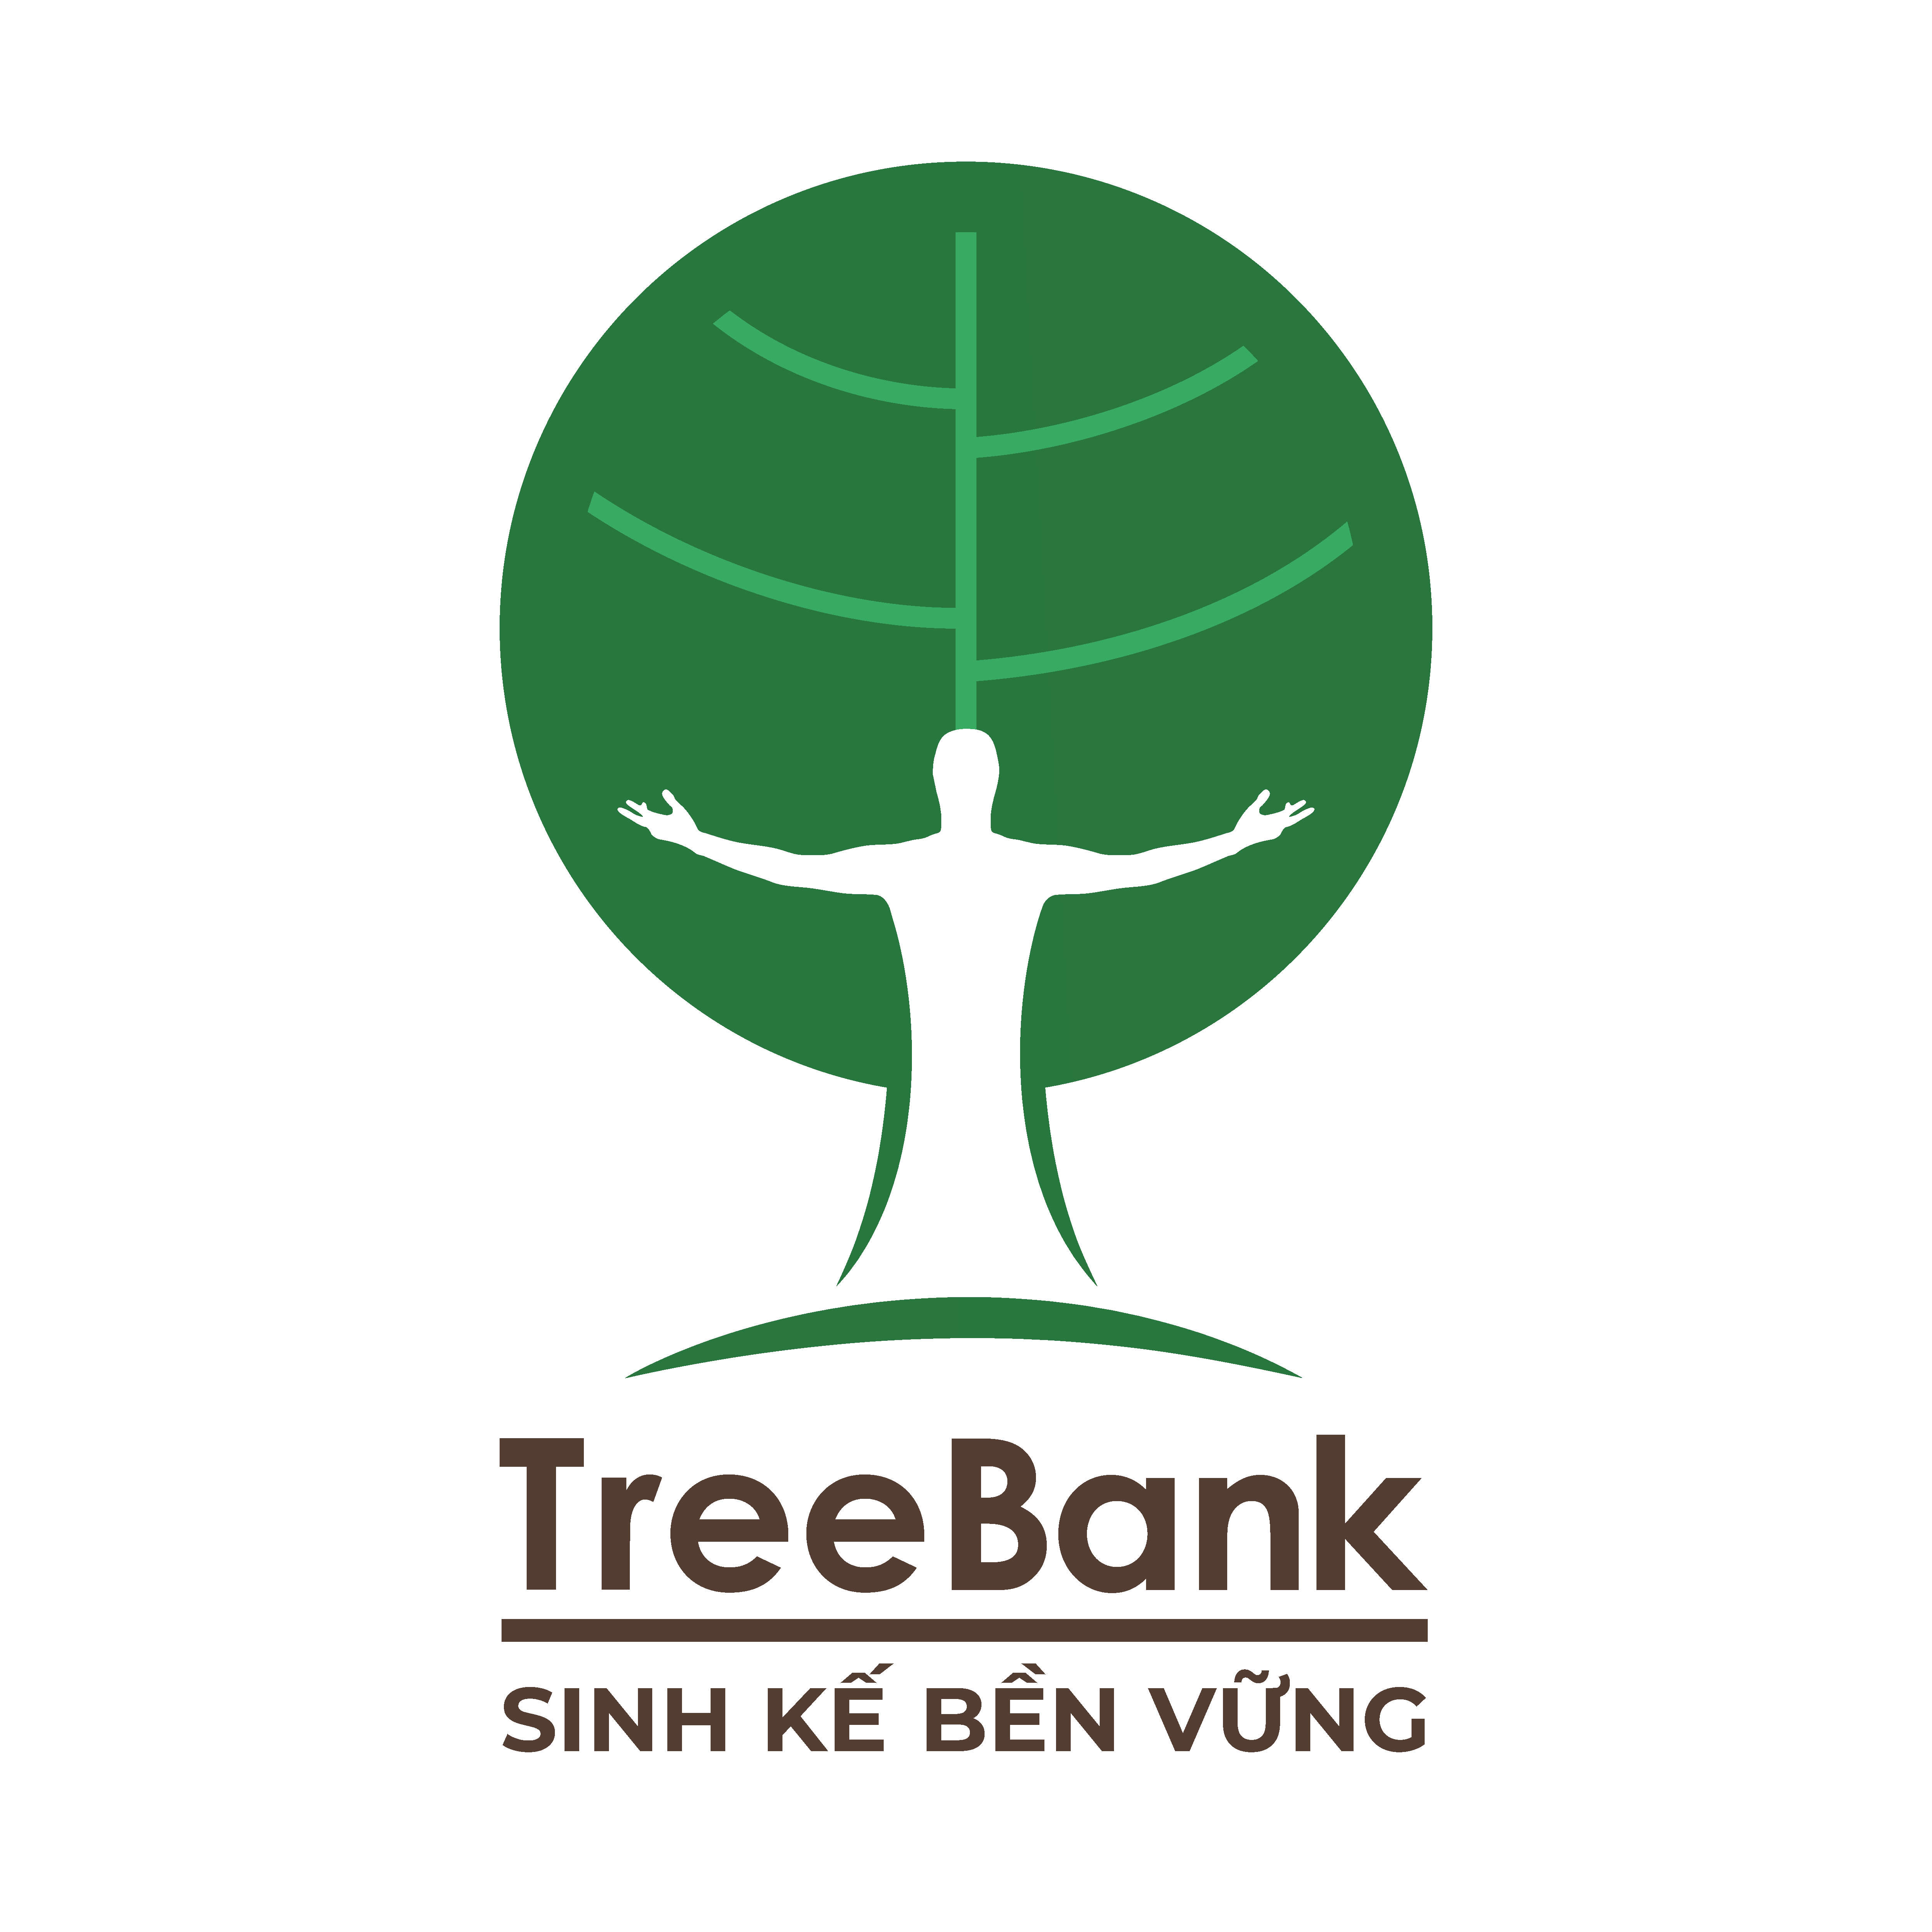 TreeBank